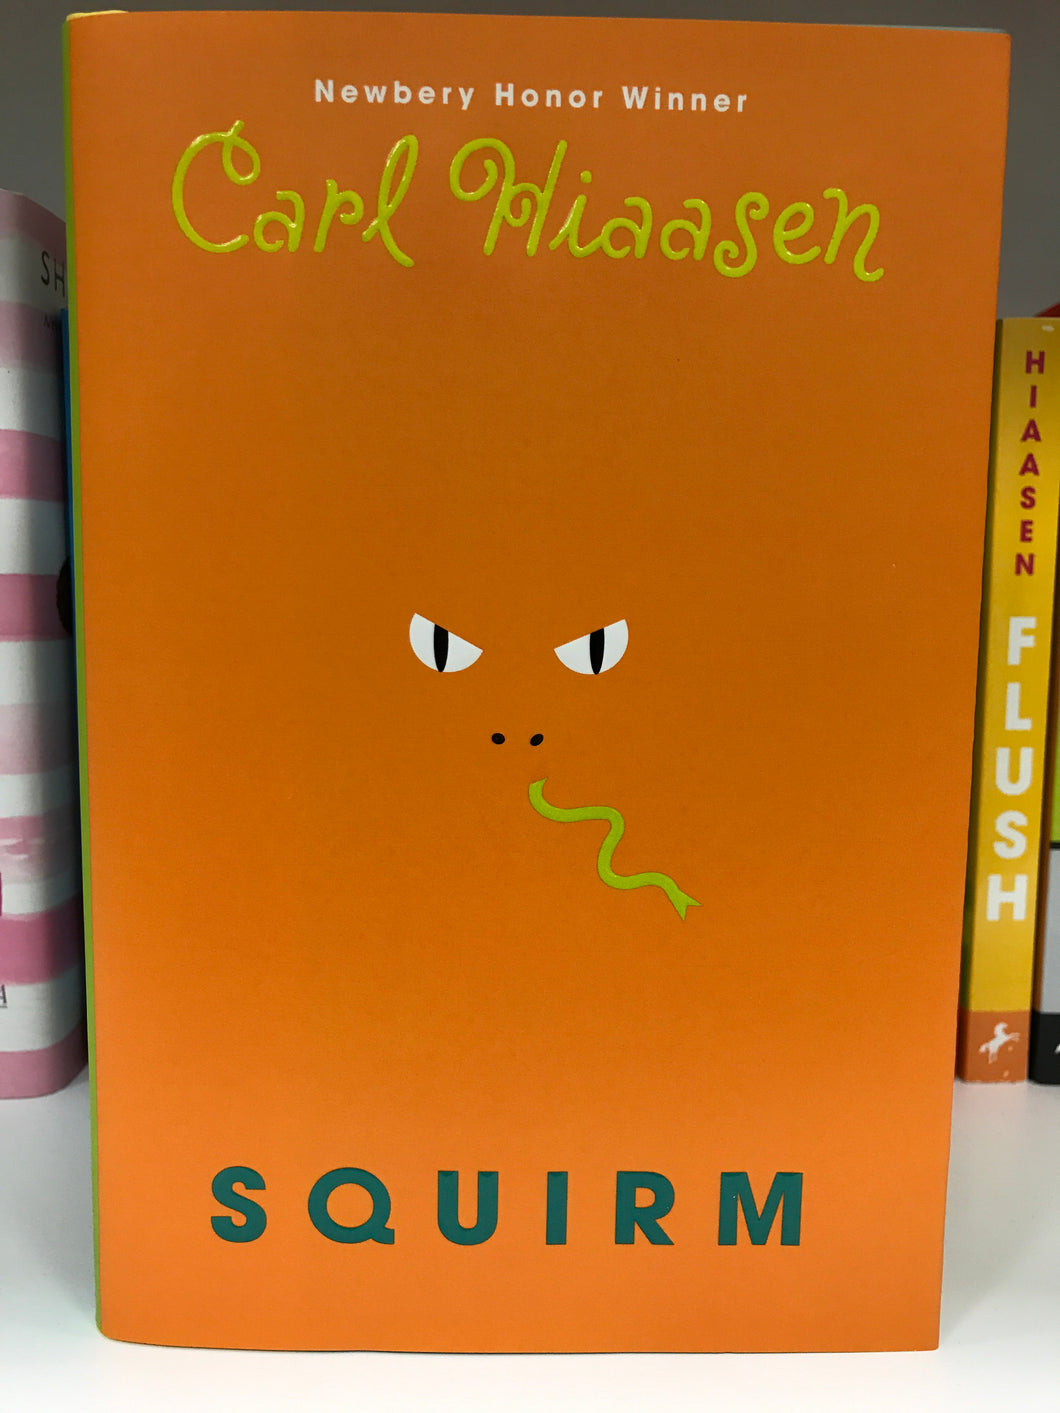 Squirm by Carl Hiaasen